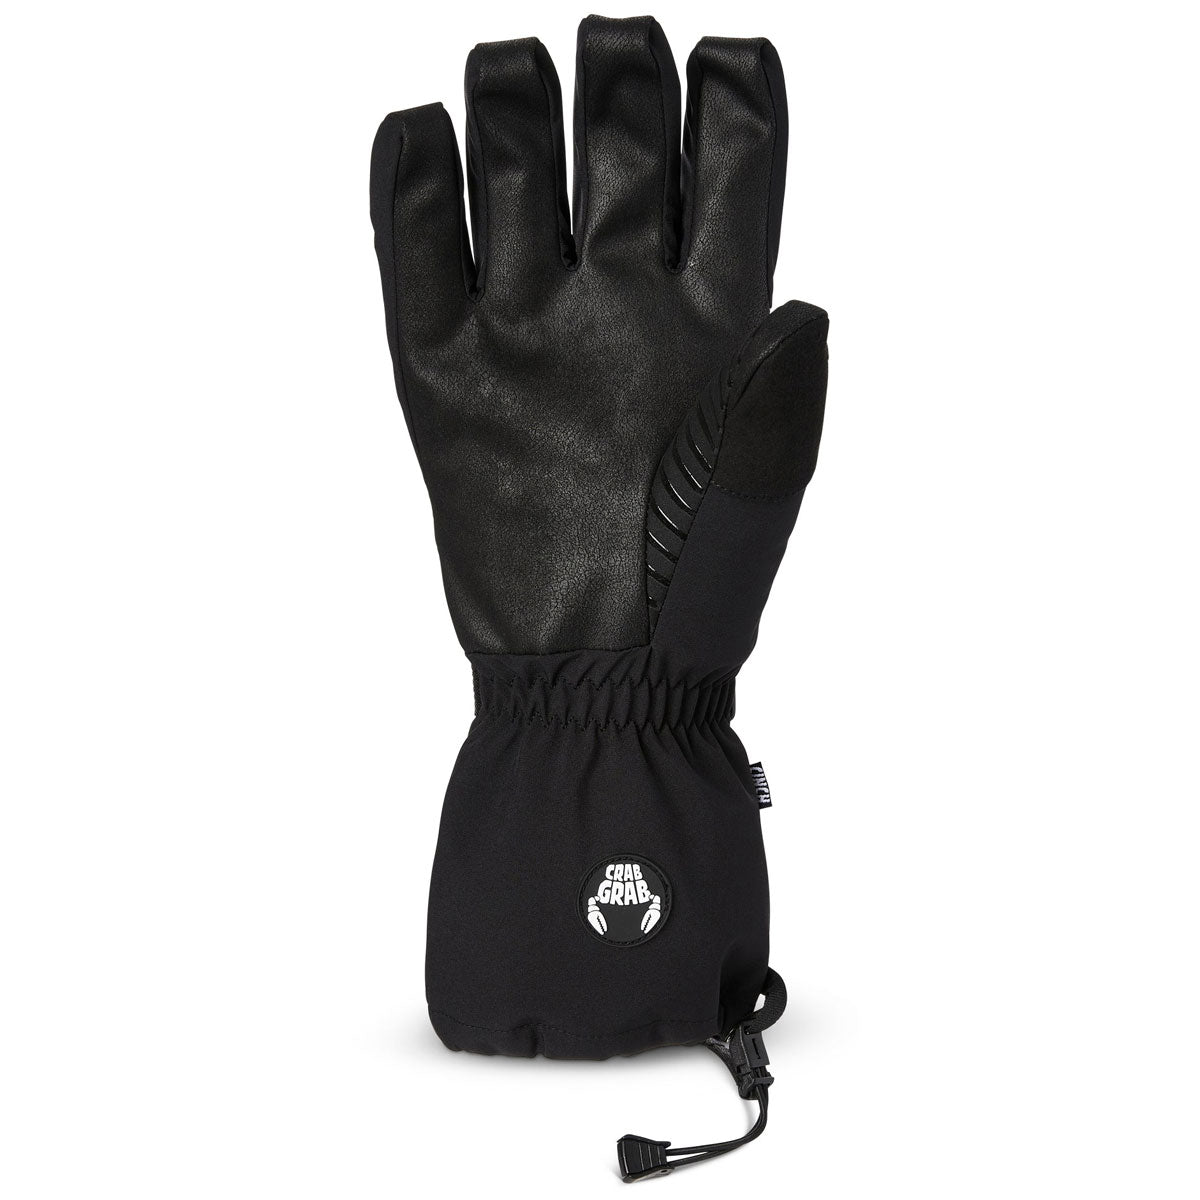 Crab Grab Cinch Snowboard Gloves - Black image 2